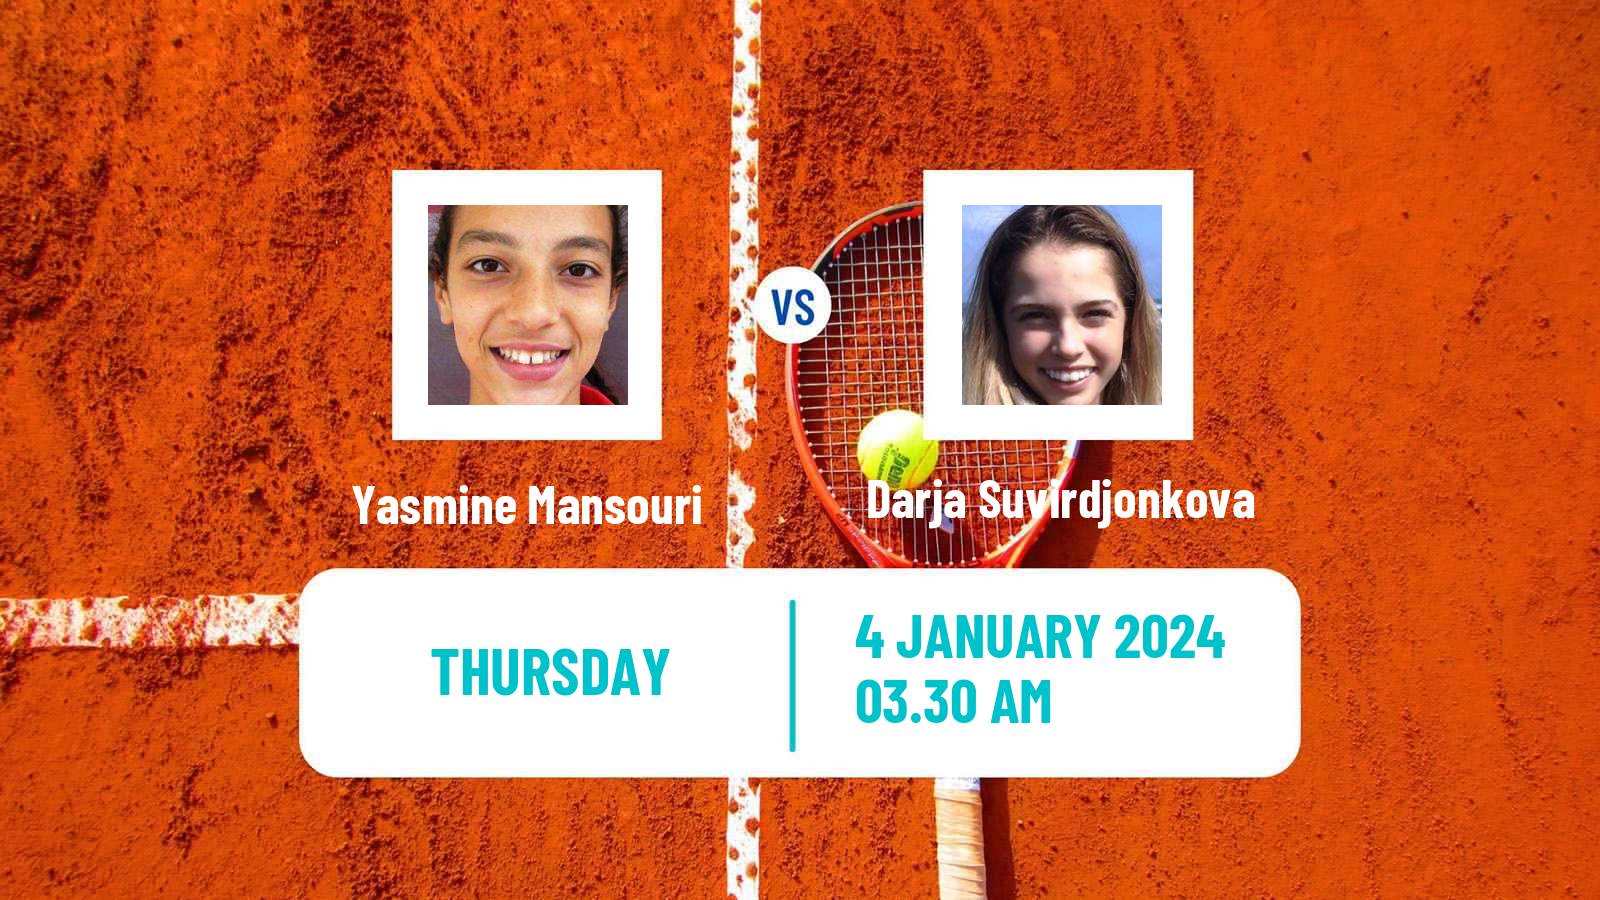 Tennis ITF W15 Monastir Women Yasmine Mansouri - Darja Suvirdjonkova